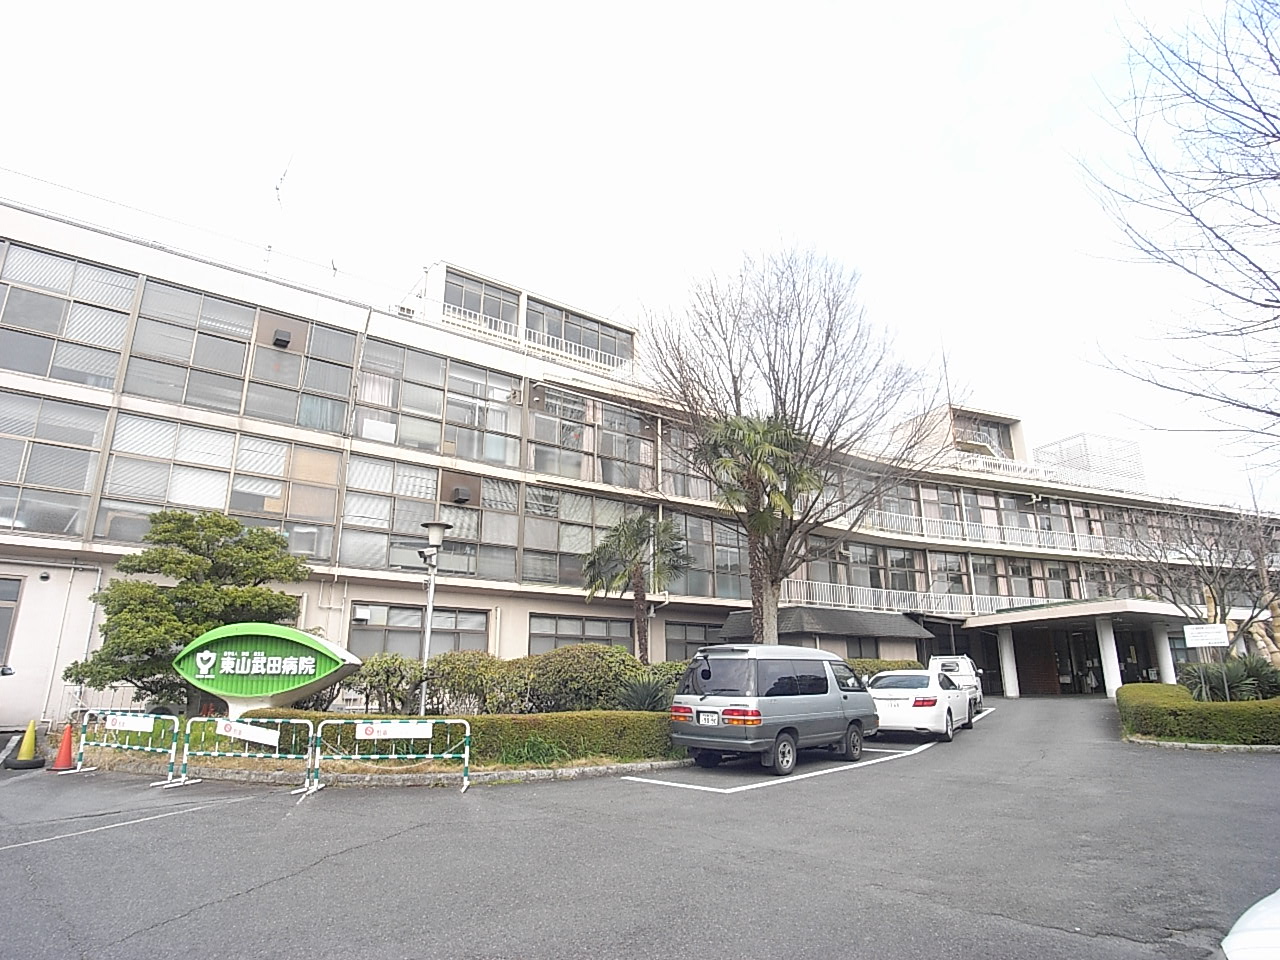 Hospital. 1530m to Higashiyama Takeda Hospital (Hospital)